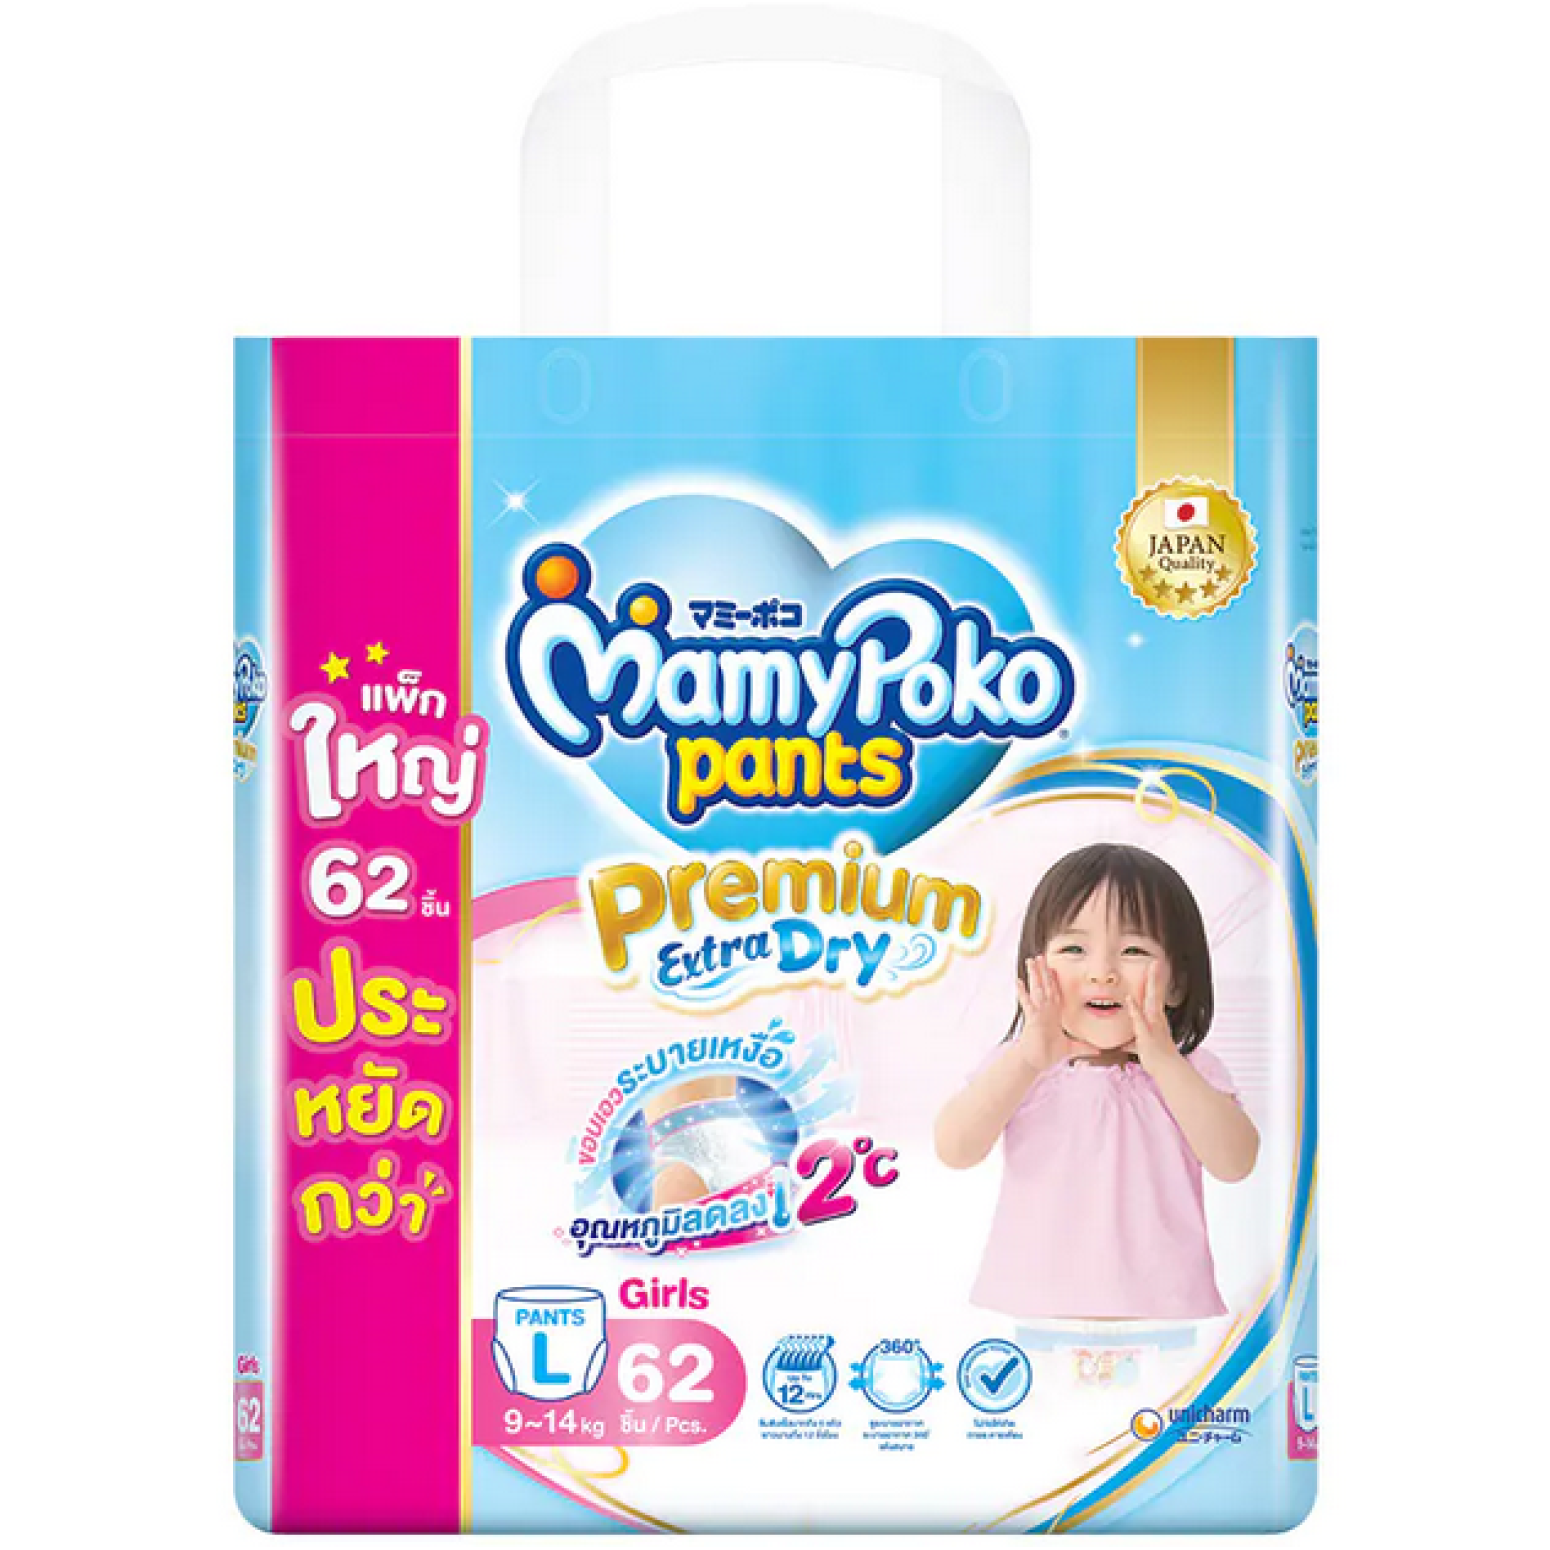 Mamy Poko Pants Extra Dry Skin Baby Diaper Pants Girl Size L 62pcs.